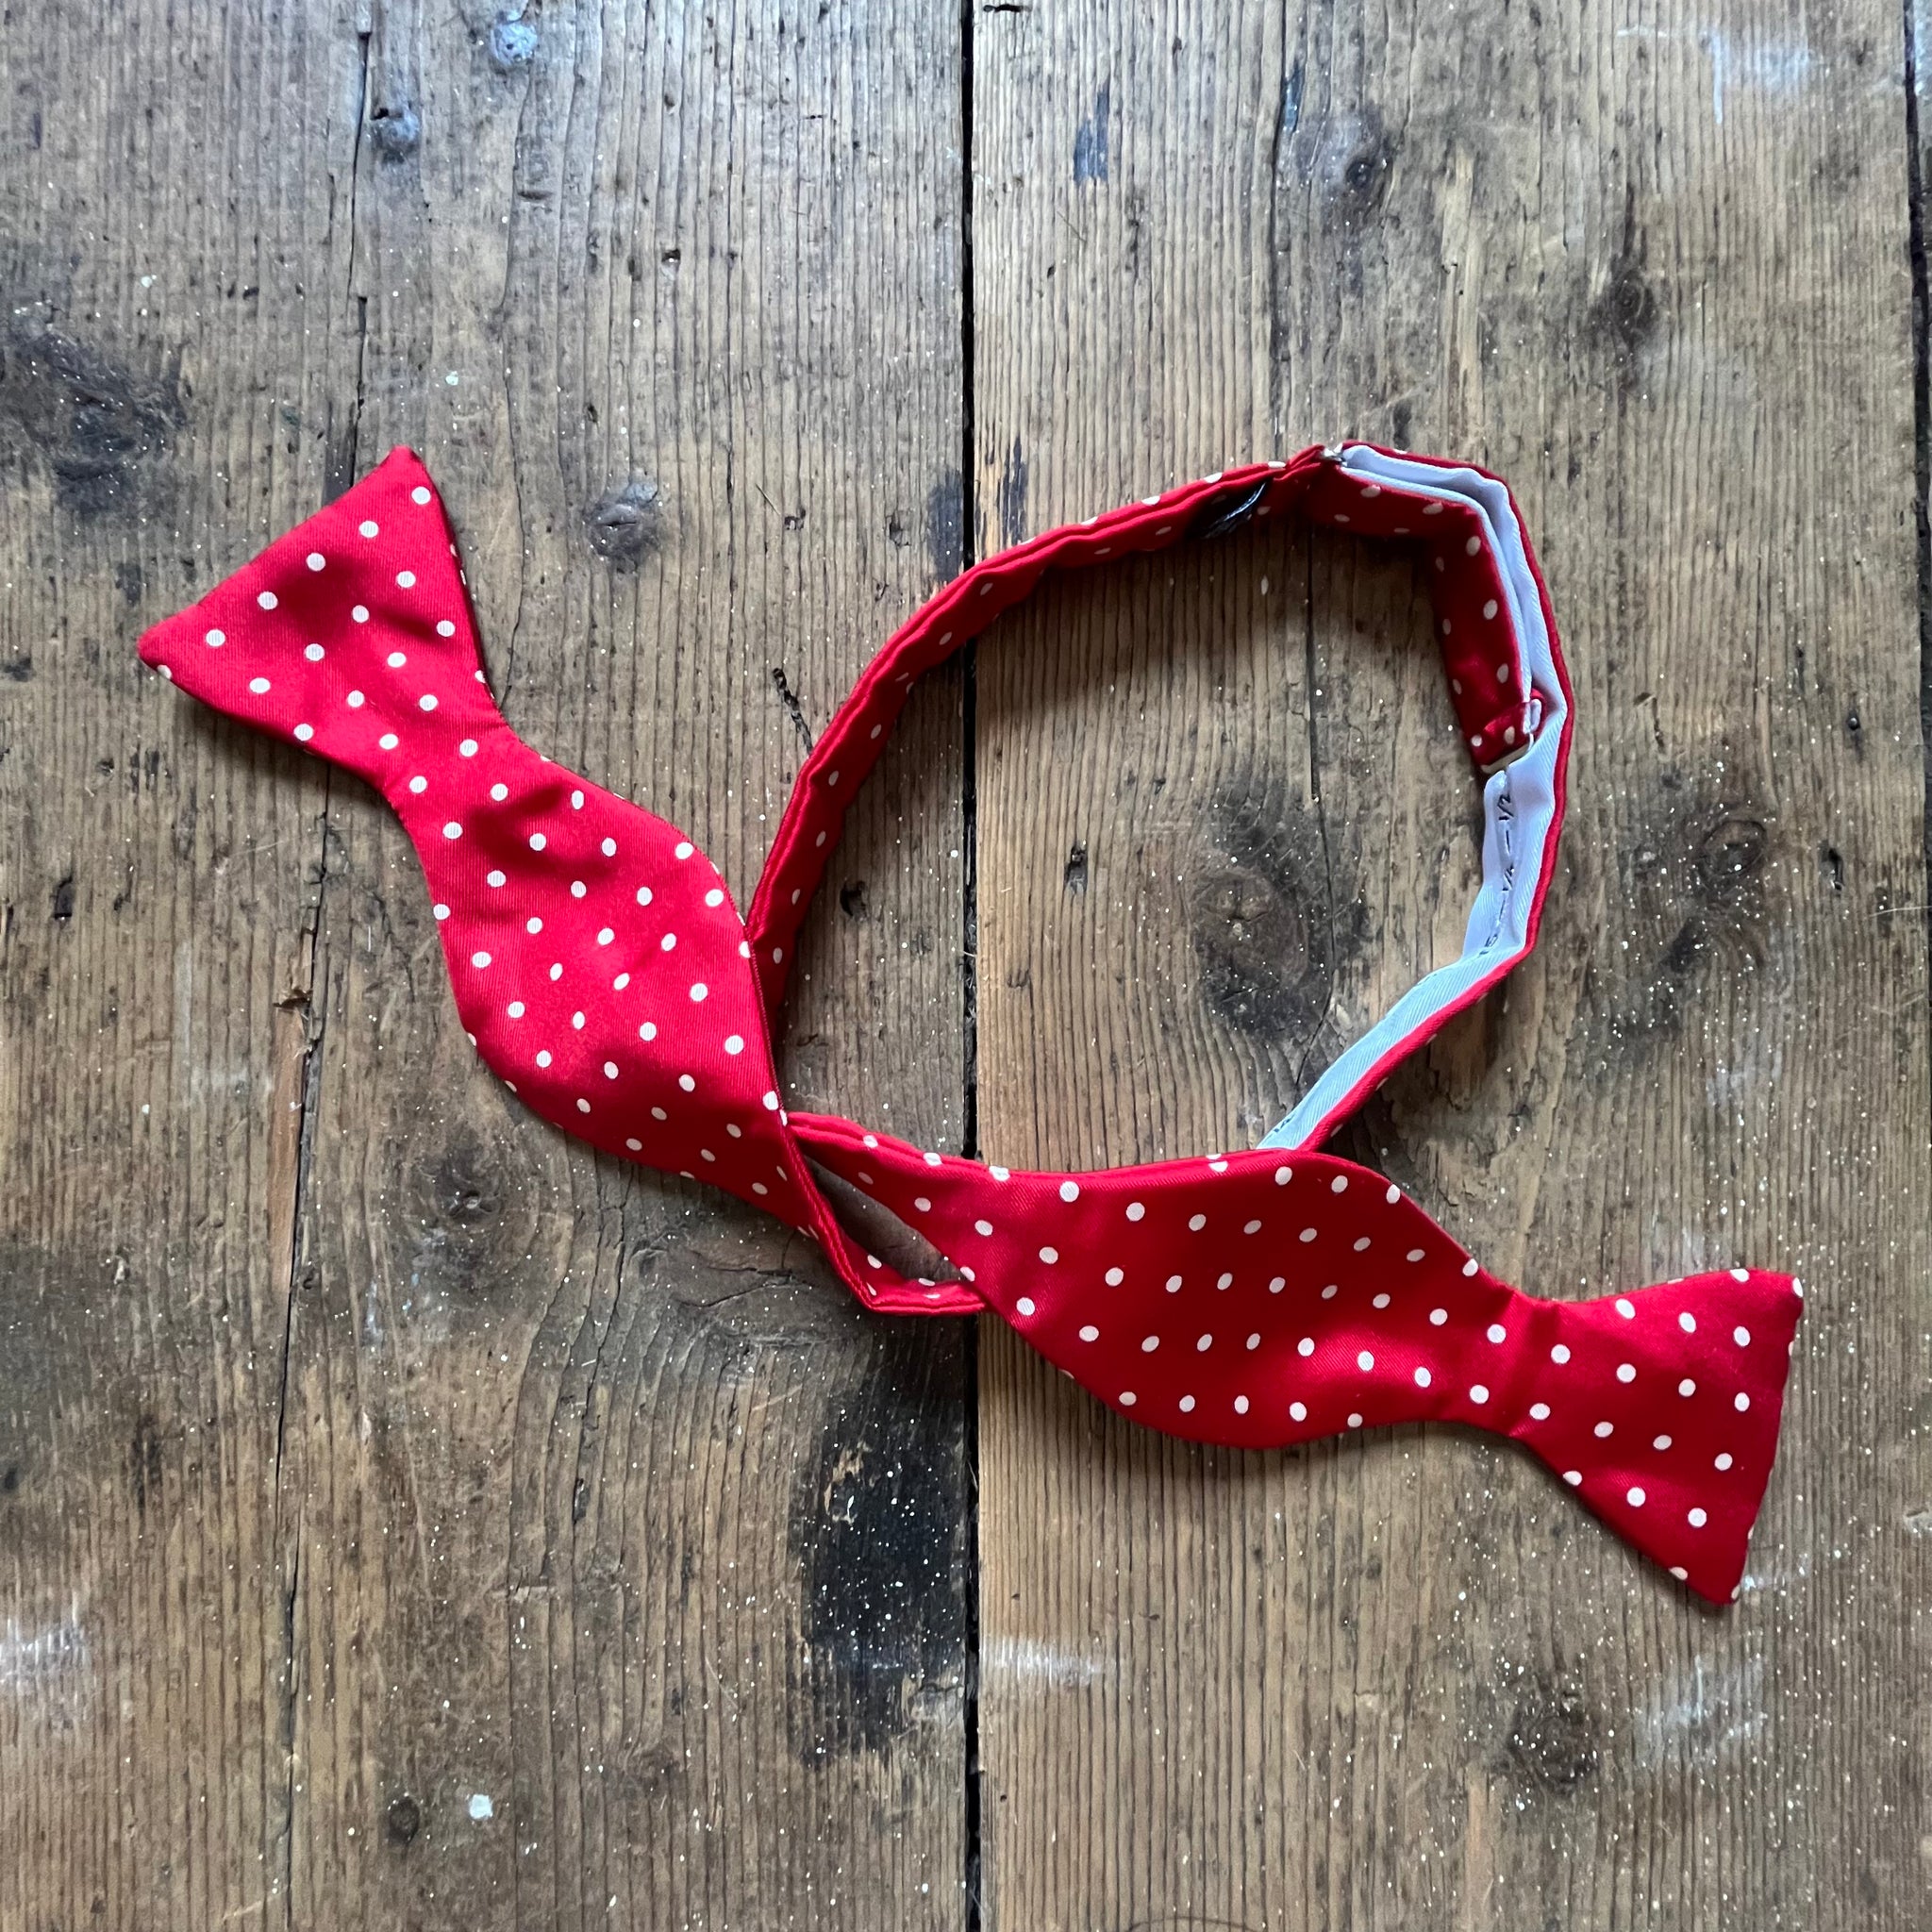 Regent - Silk Bow Tie - Spot - Red